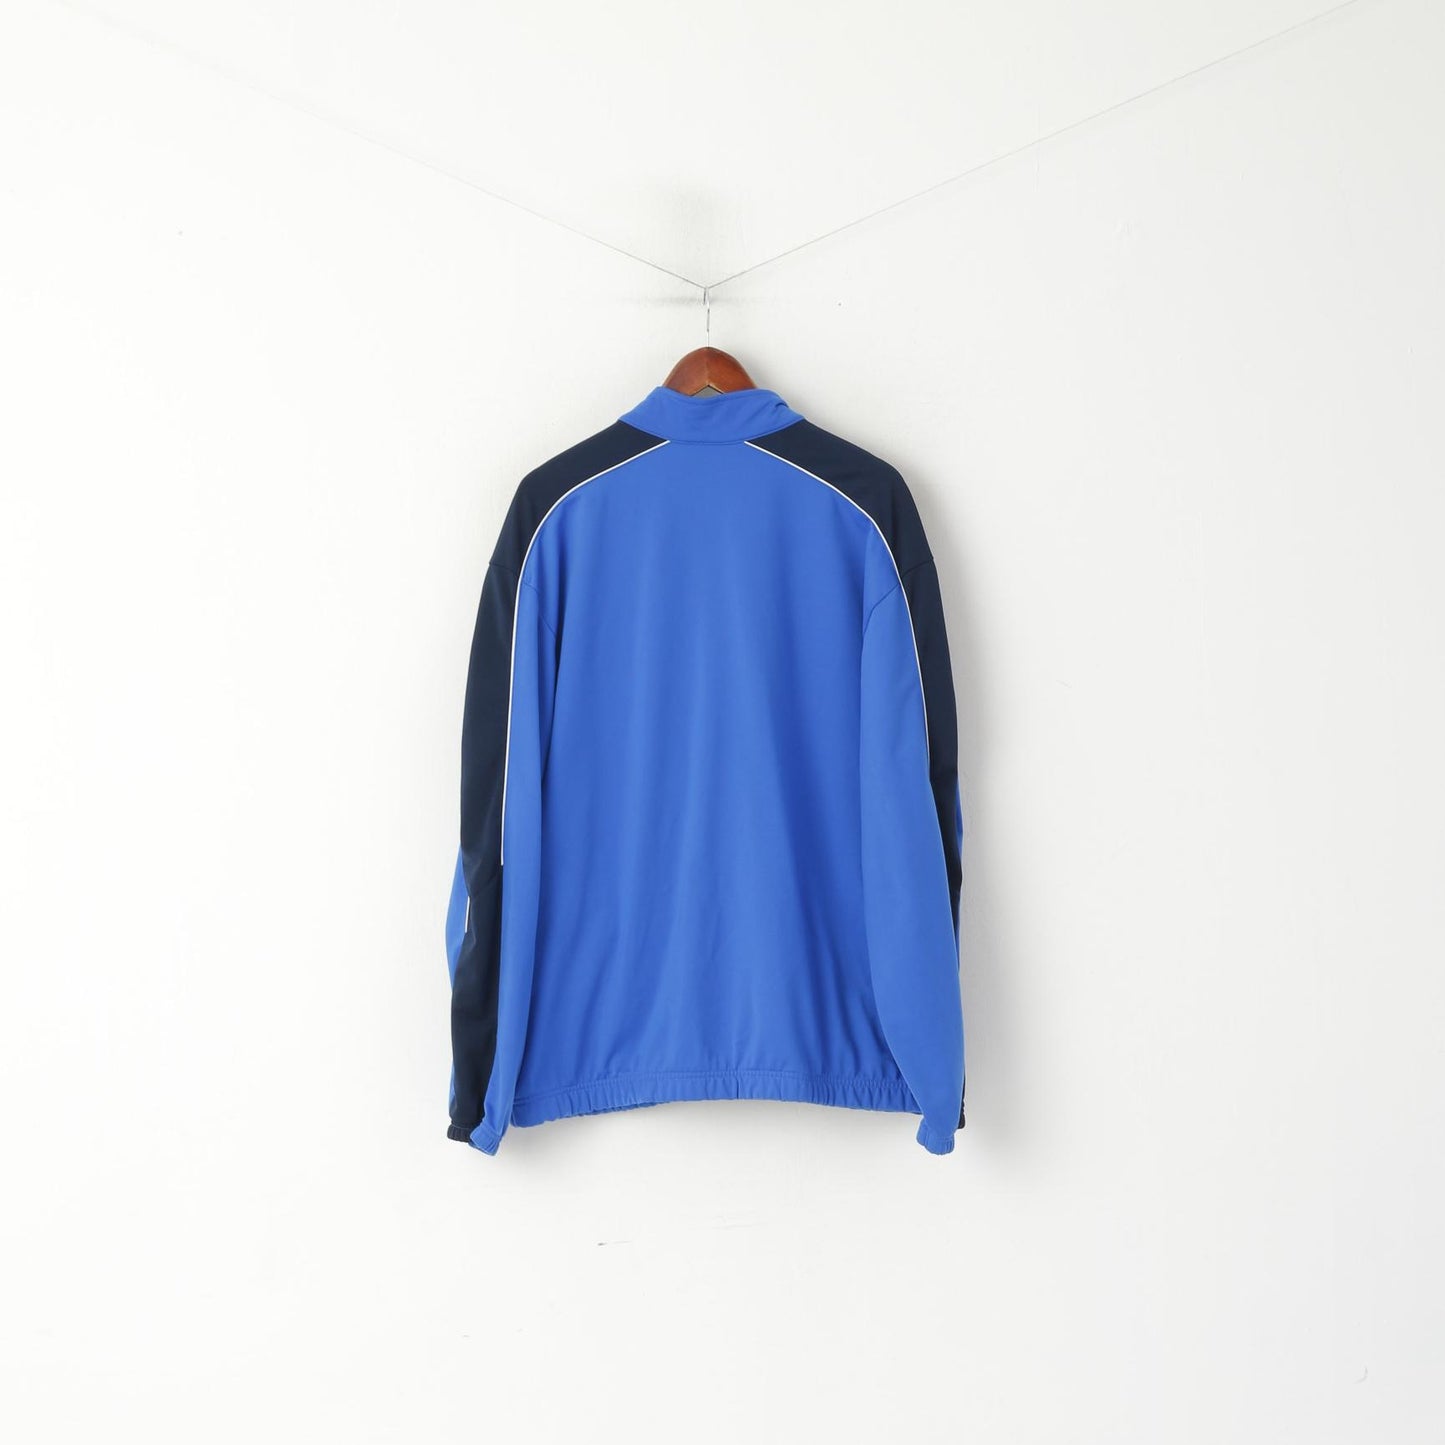 Nike Men XL 188 Sweatshirt Blue Shiny Retro Full Zip Activewear Track Top